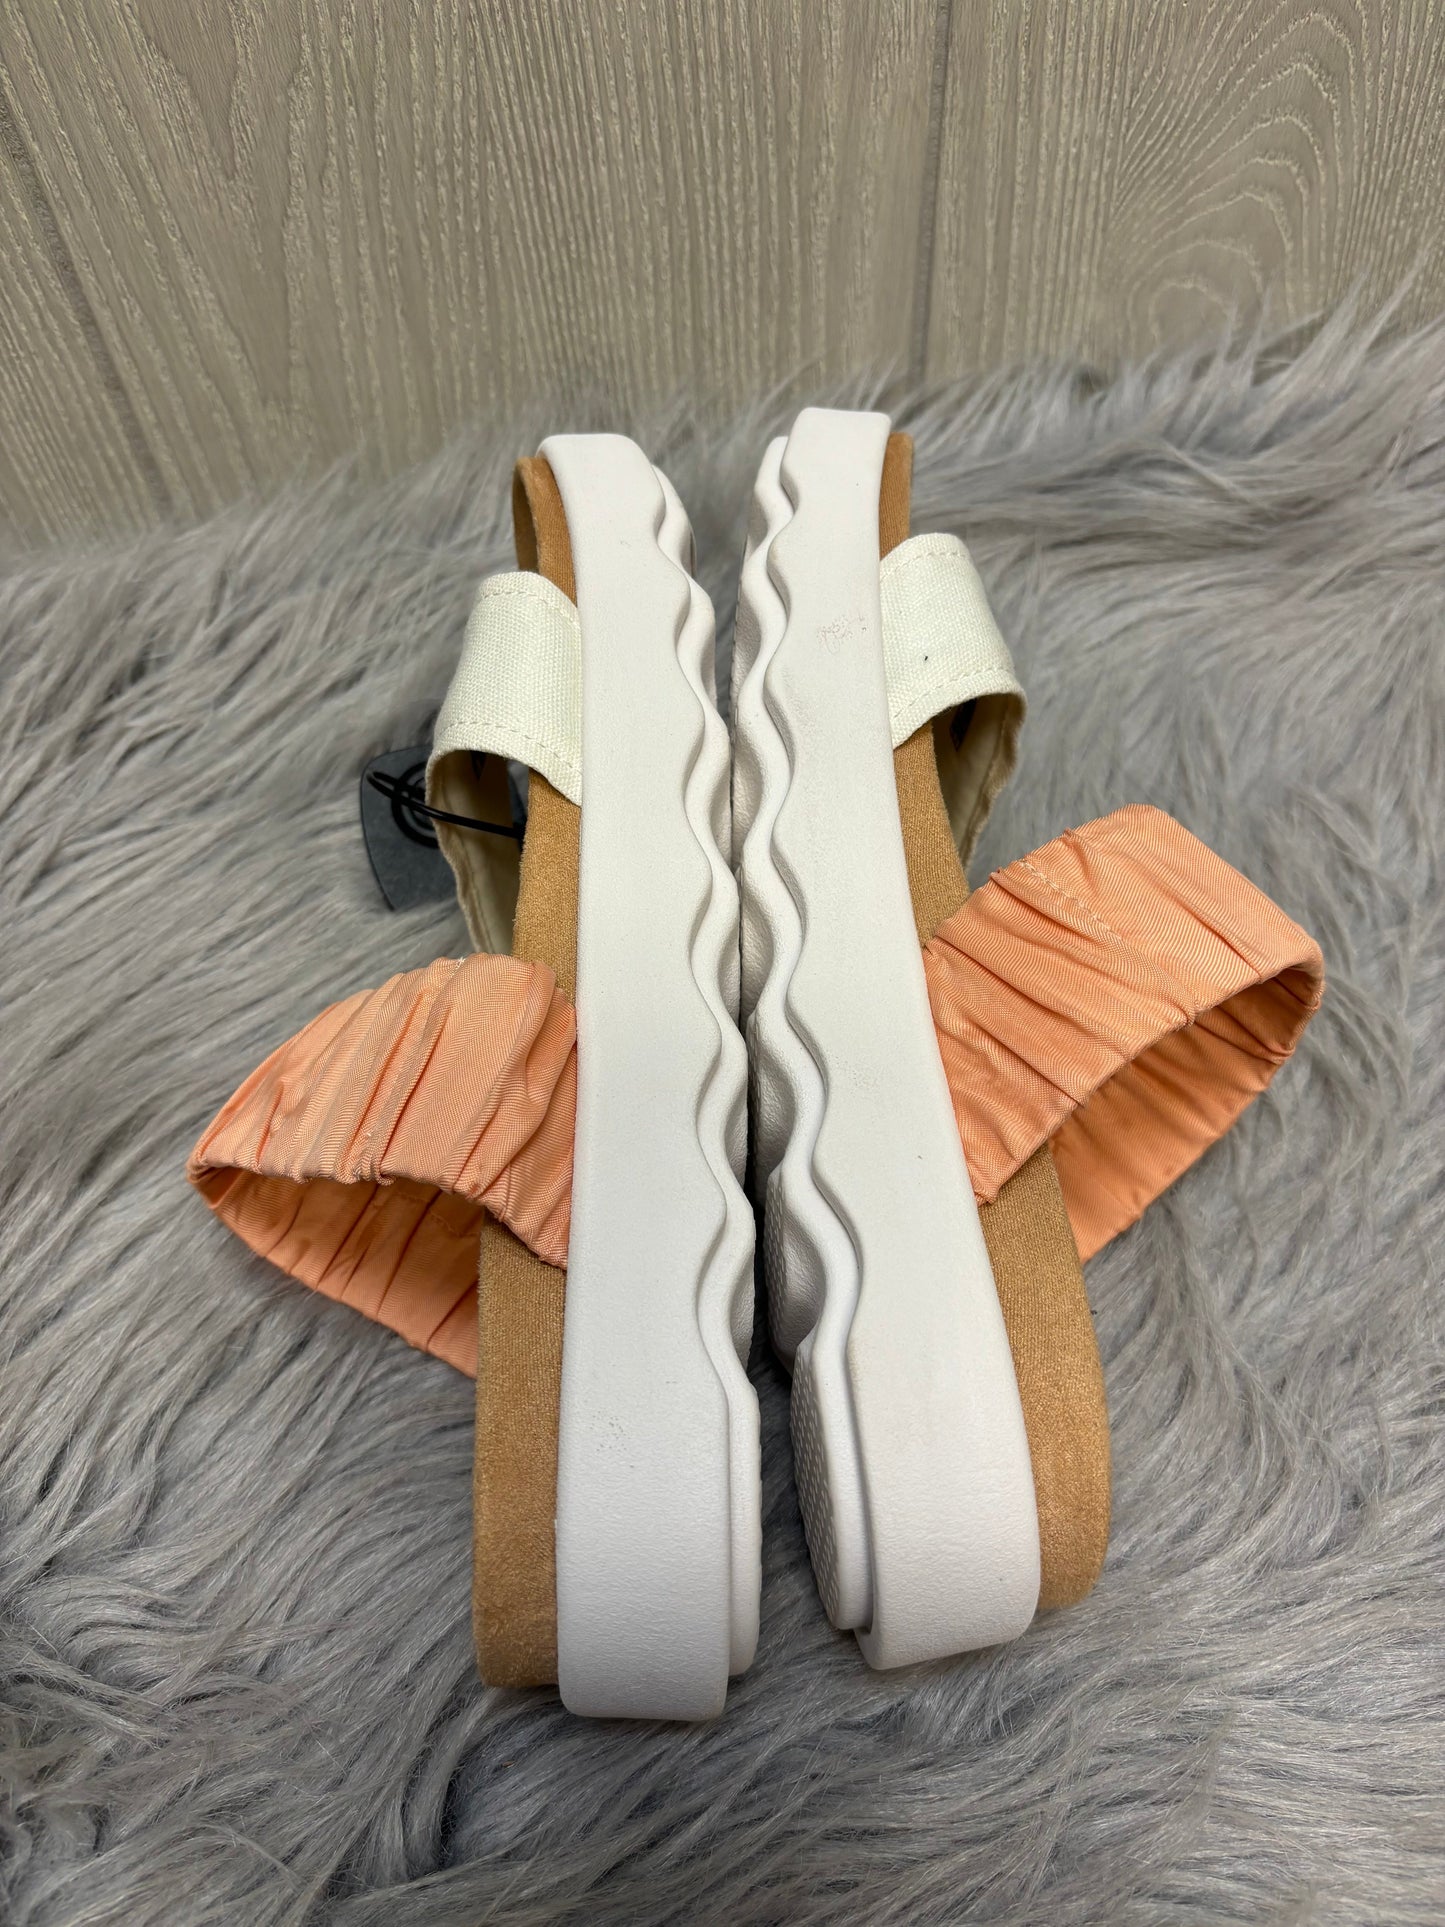 Multi-colored Sandals Flats Koolaburra By Ugg, Size 7.5